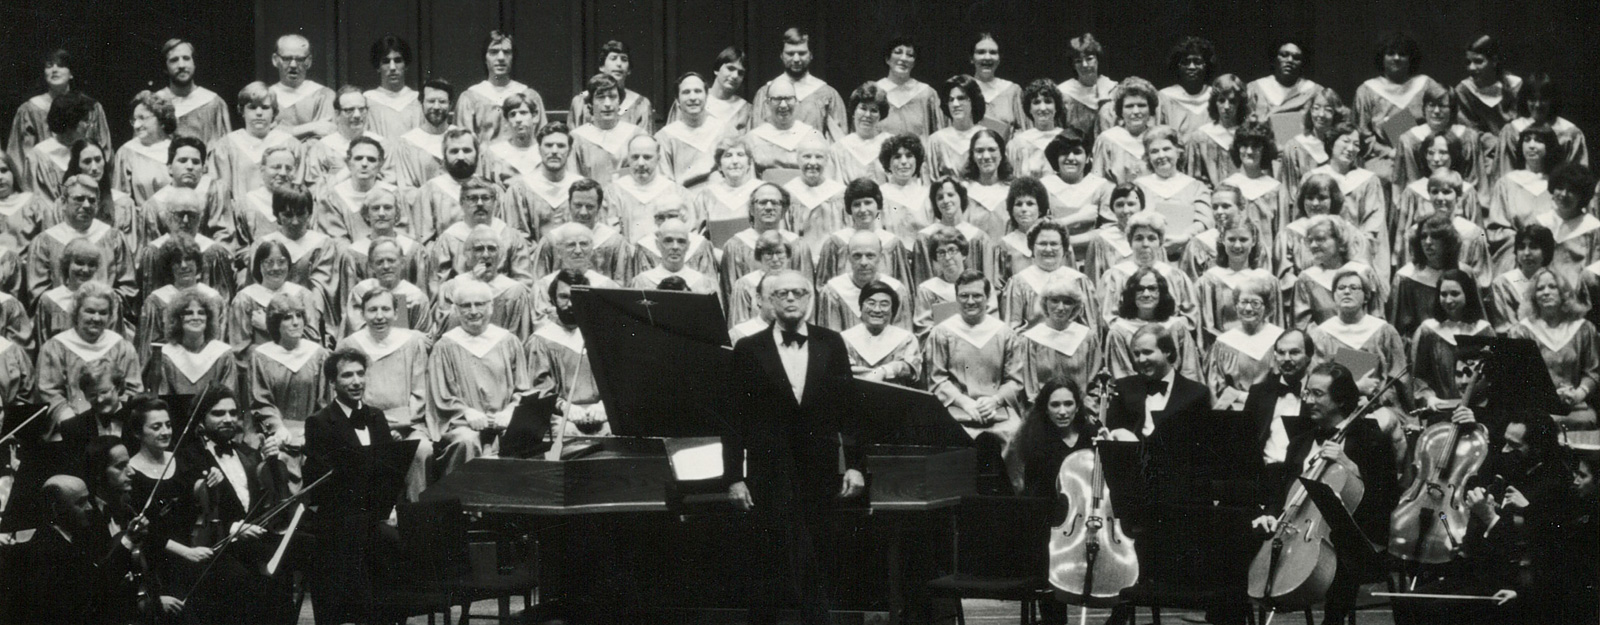 Masterwork Chorus circa 1970